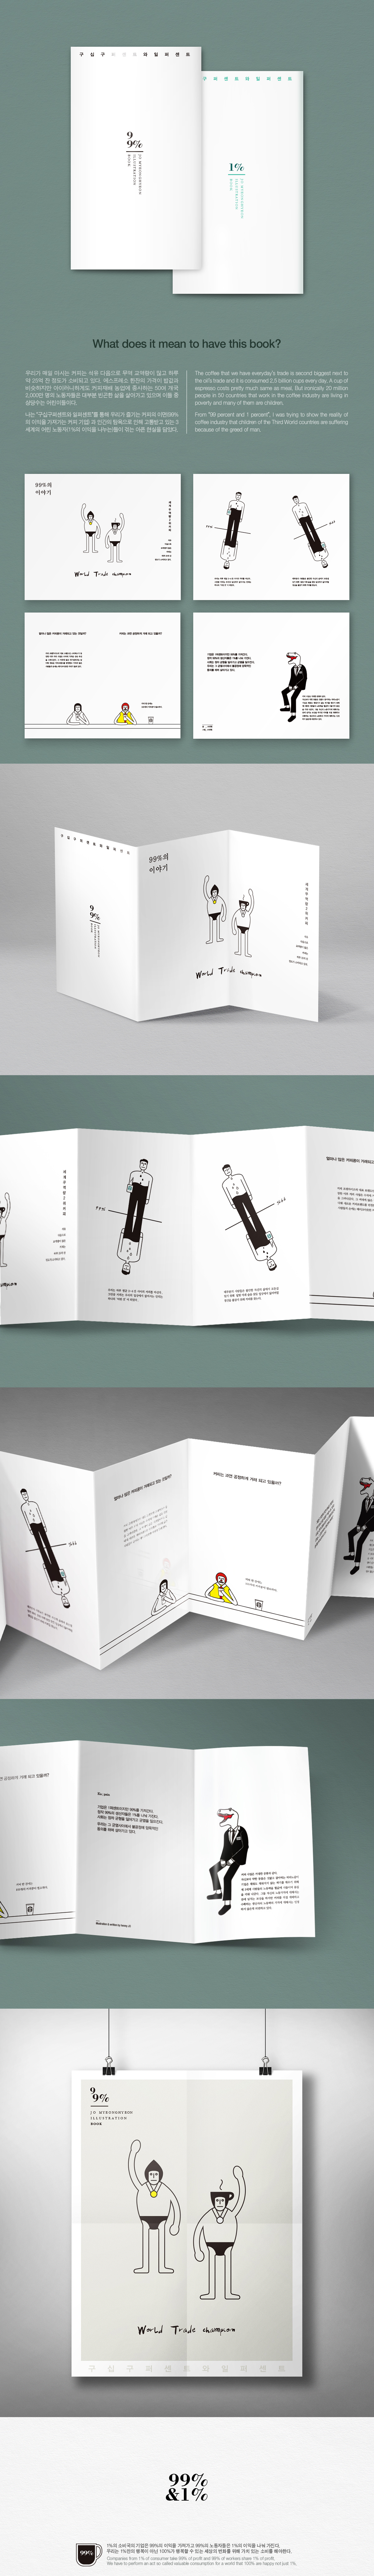 book design editorial Reaflet illust greendesign pictogram fair trade